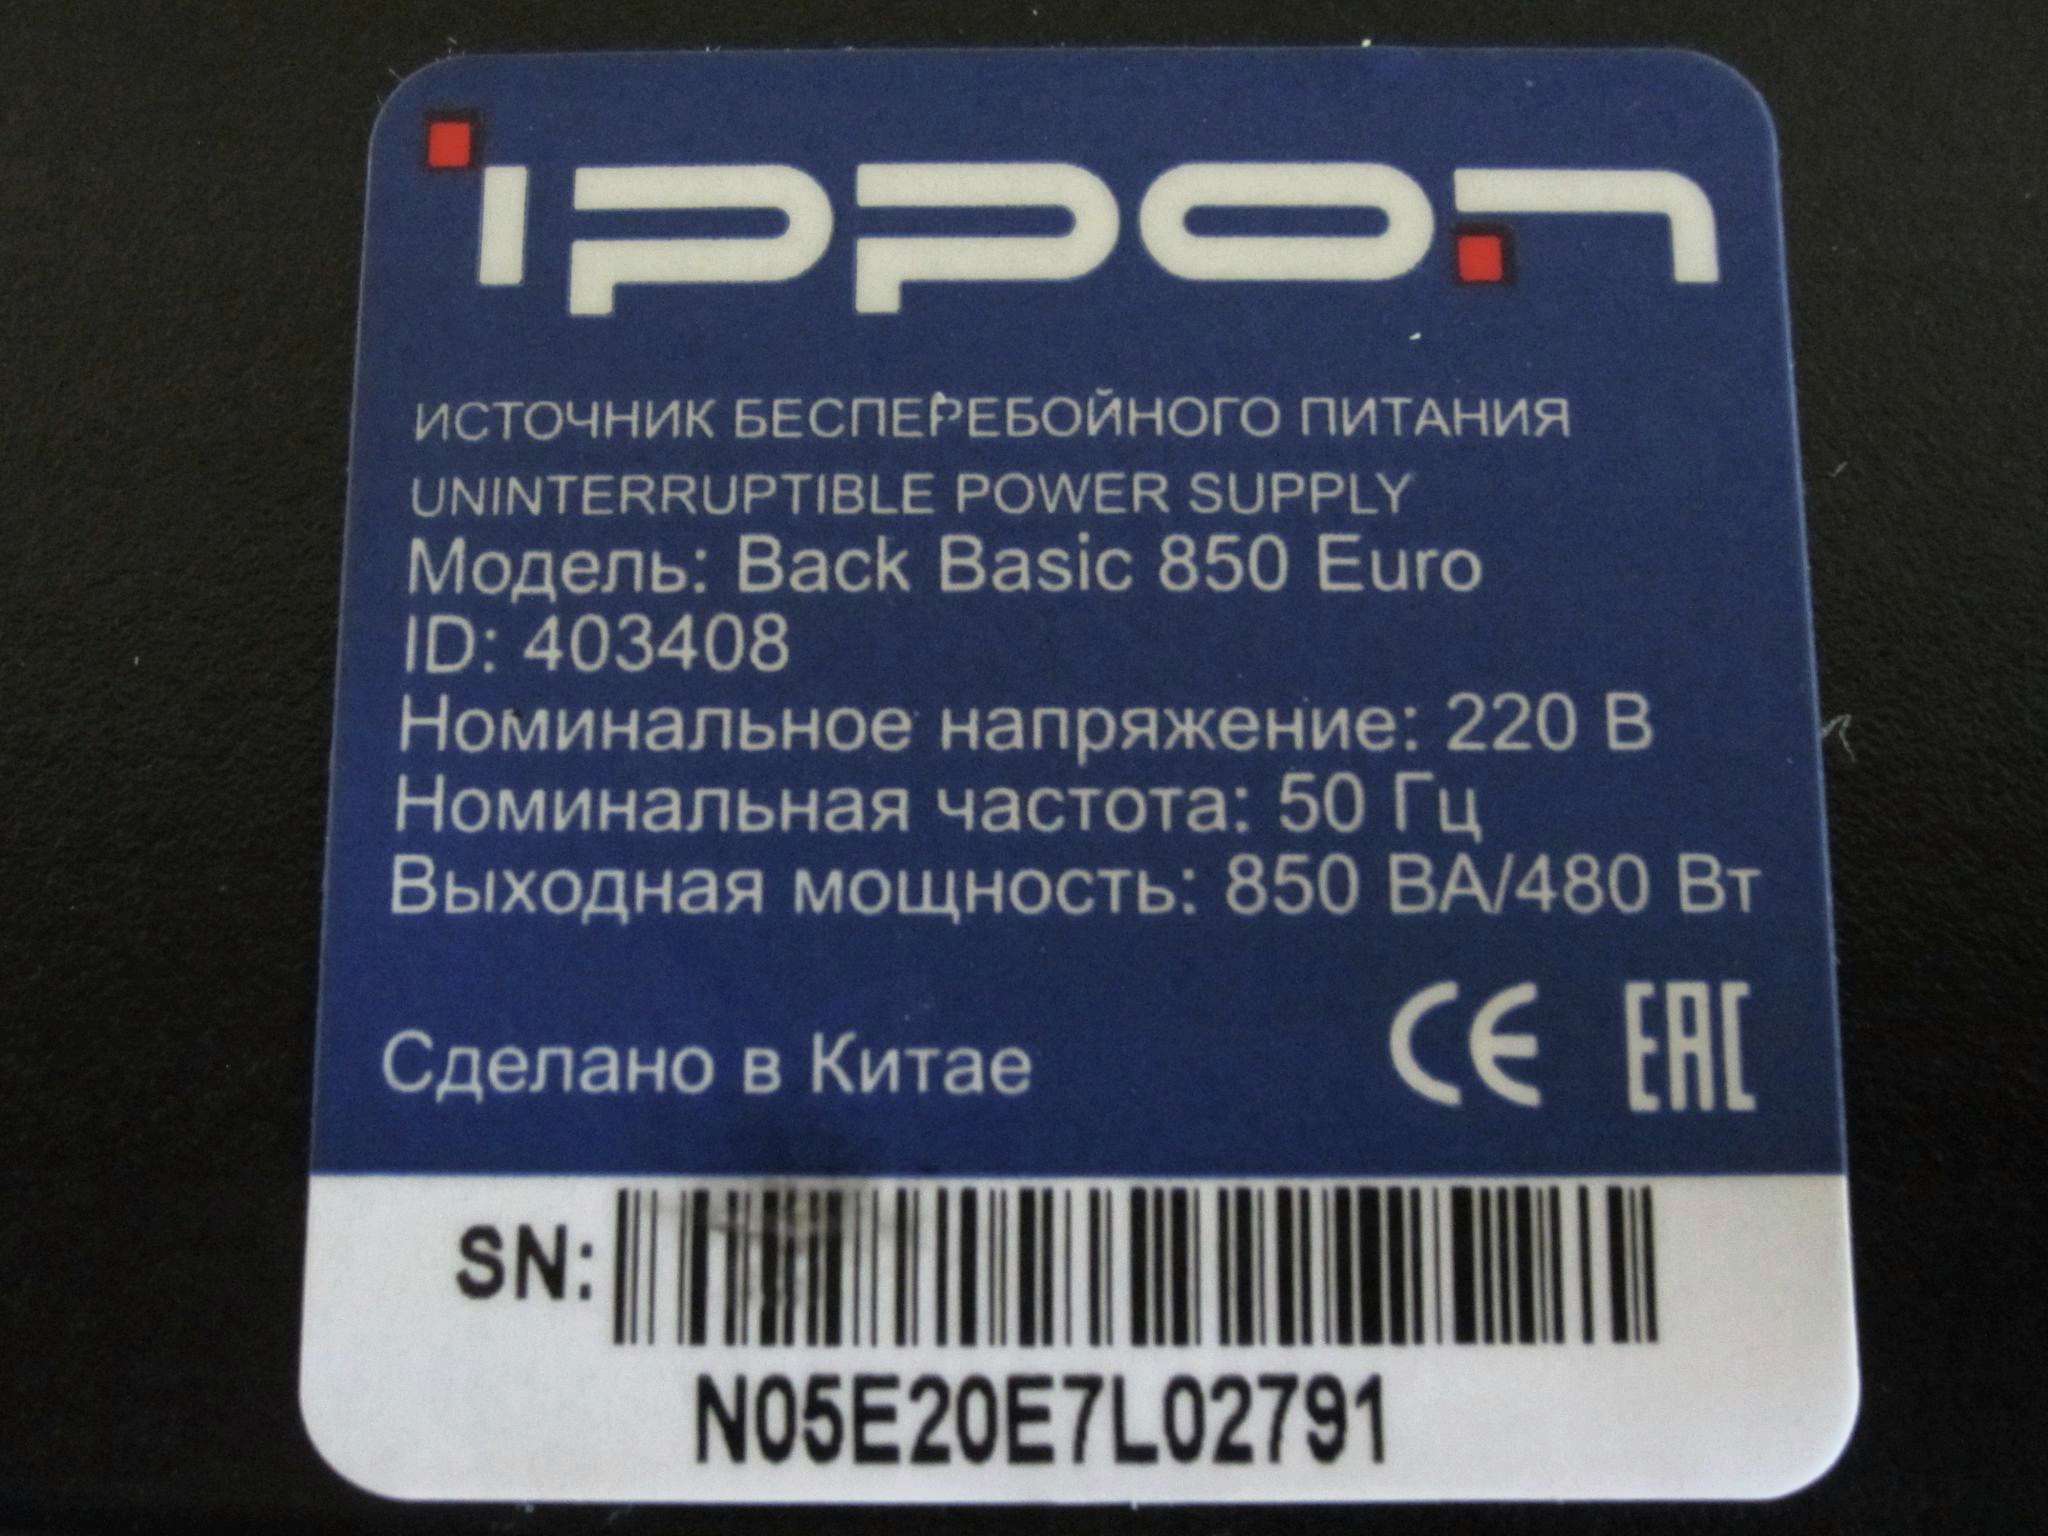 Back basic 850 euro. Ippon back Basic 850 Euro. Кнопки питания для ИБП Ippon Euro 850. ИБП Ippon 850 серийный номер. Кнопки включения ИБП Ippon euro850.